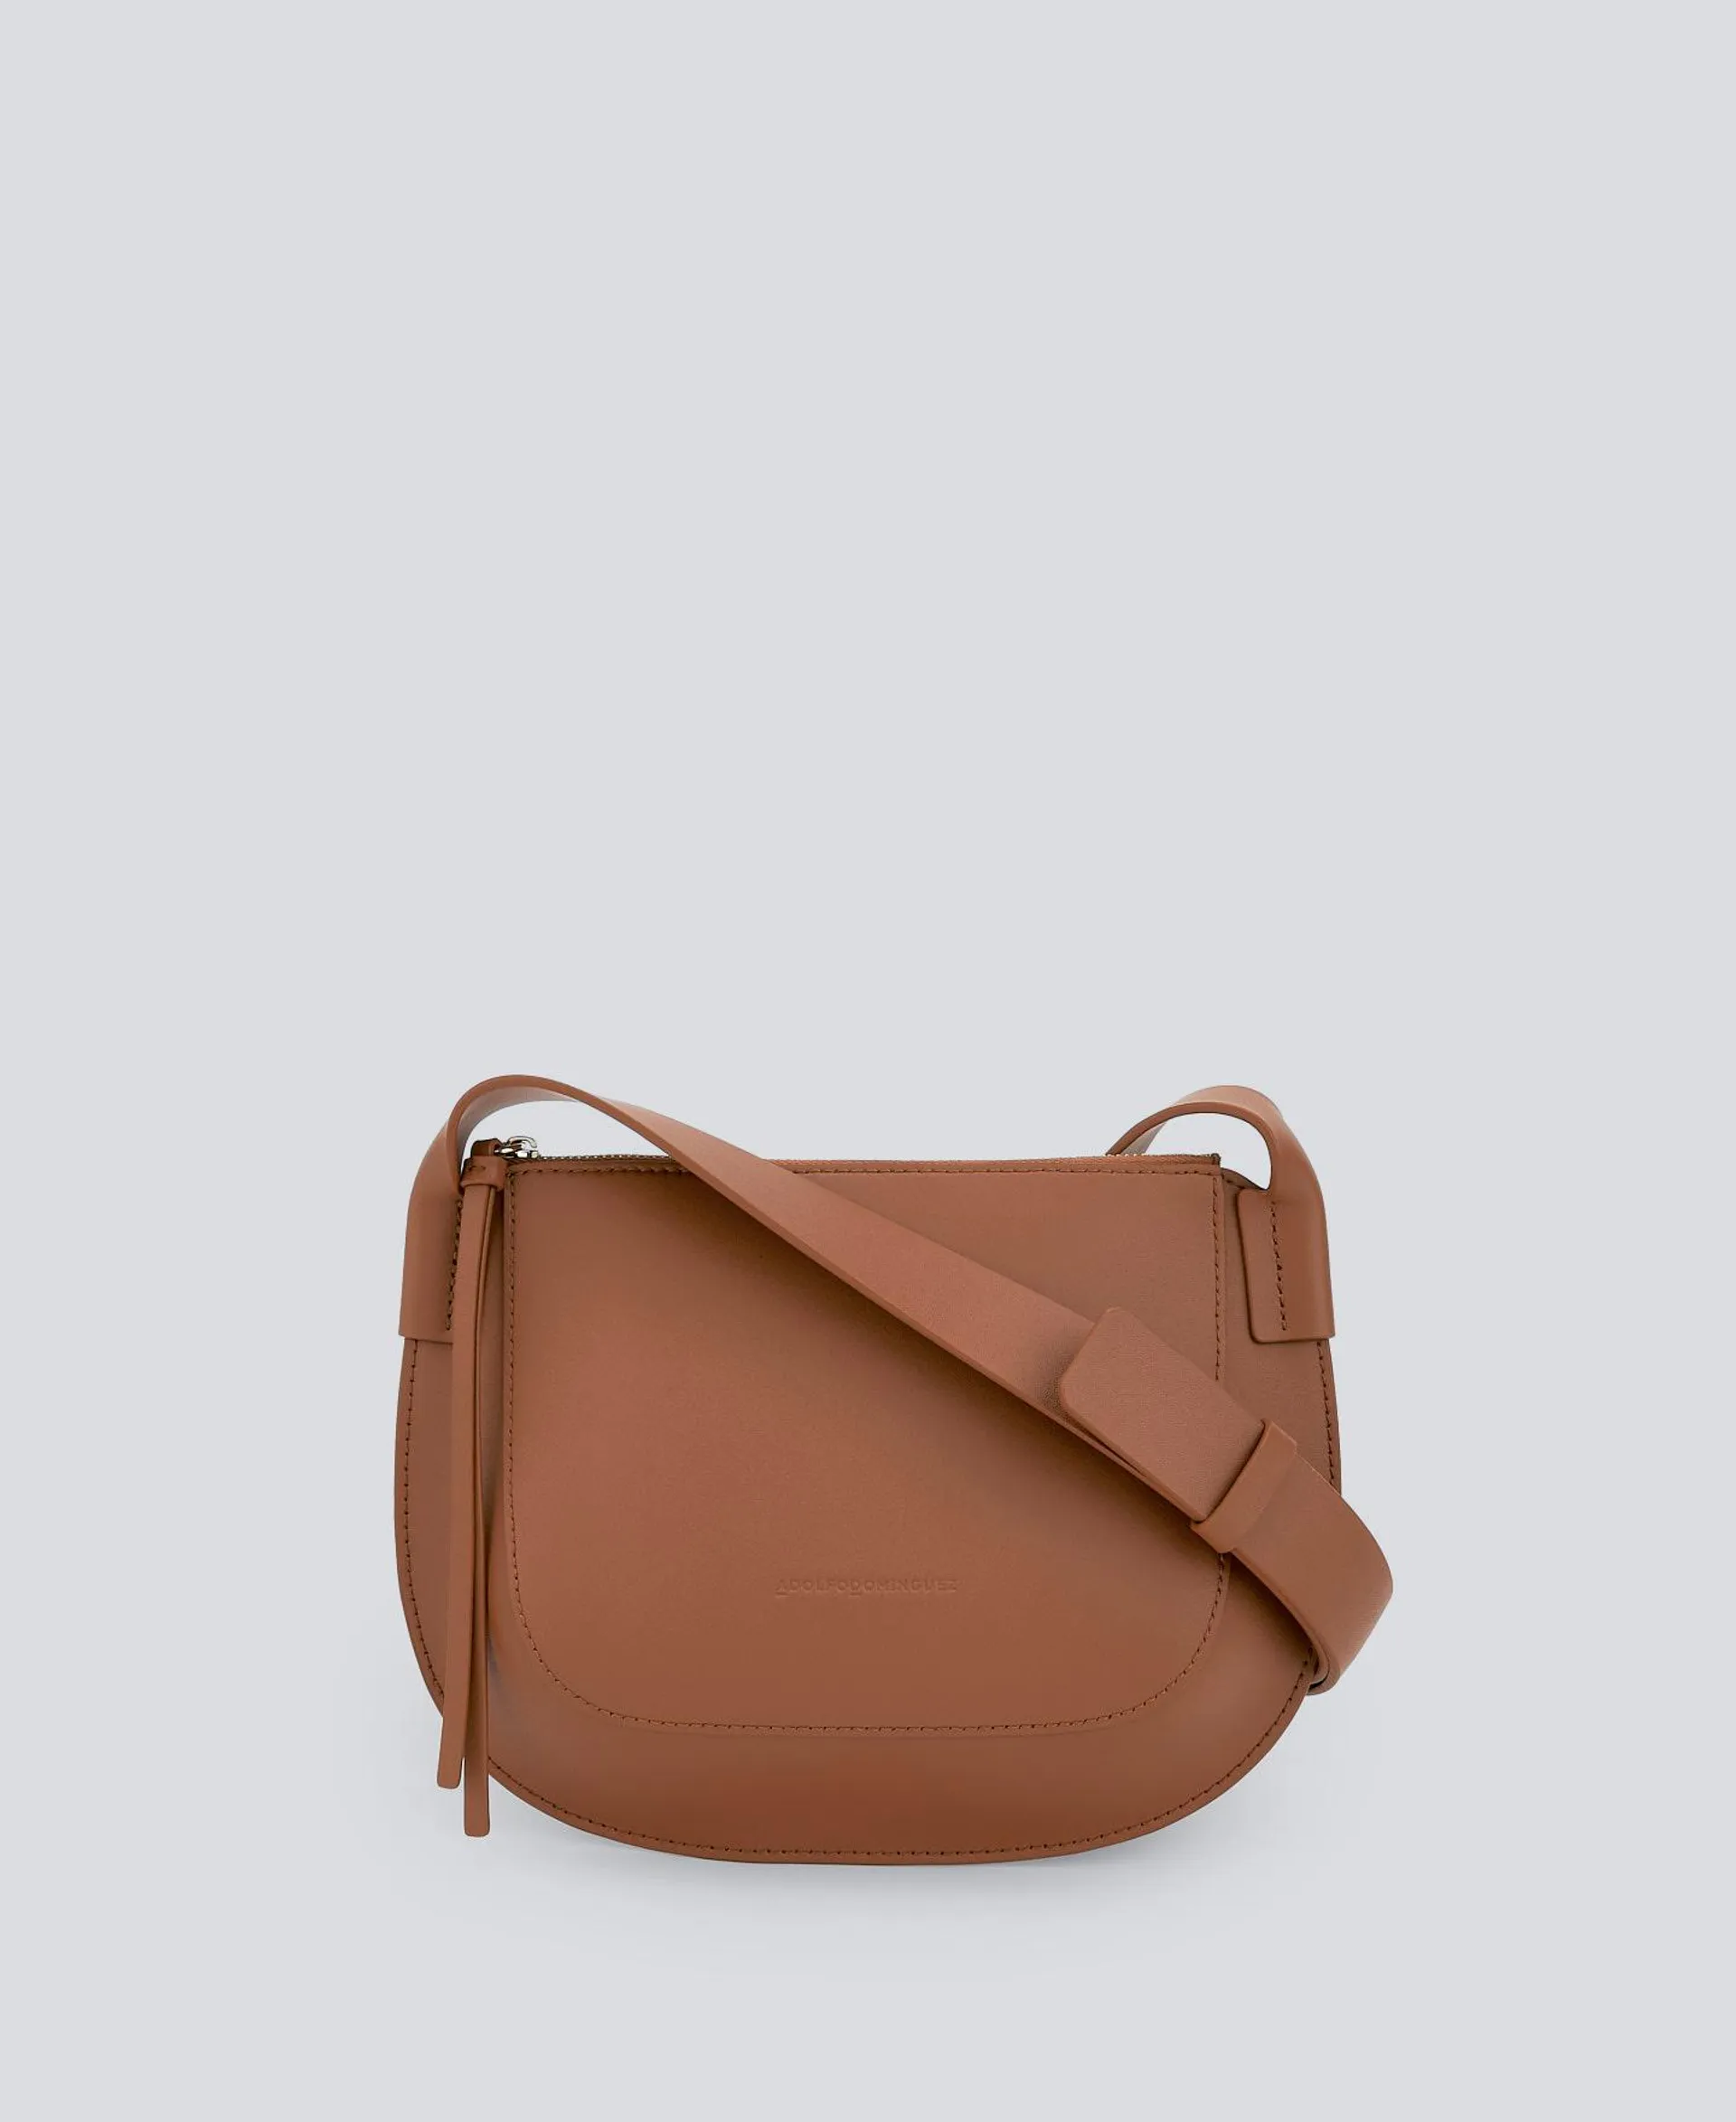 Brown leather shoulder bag woman